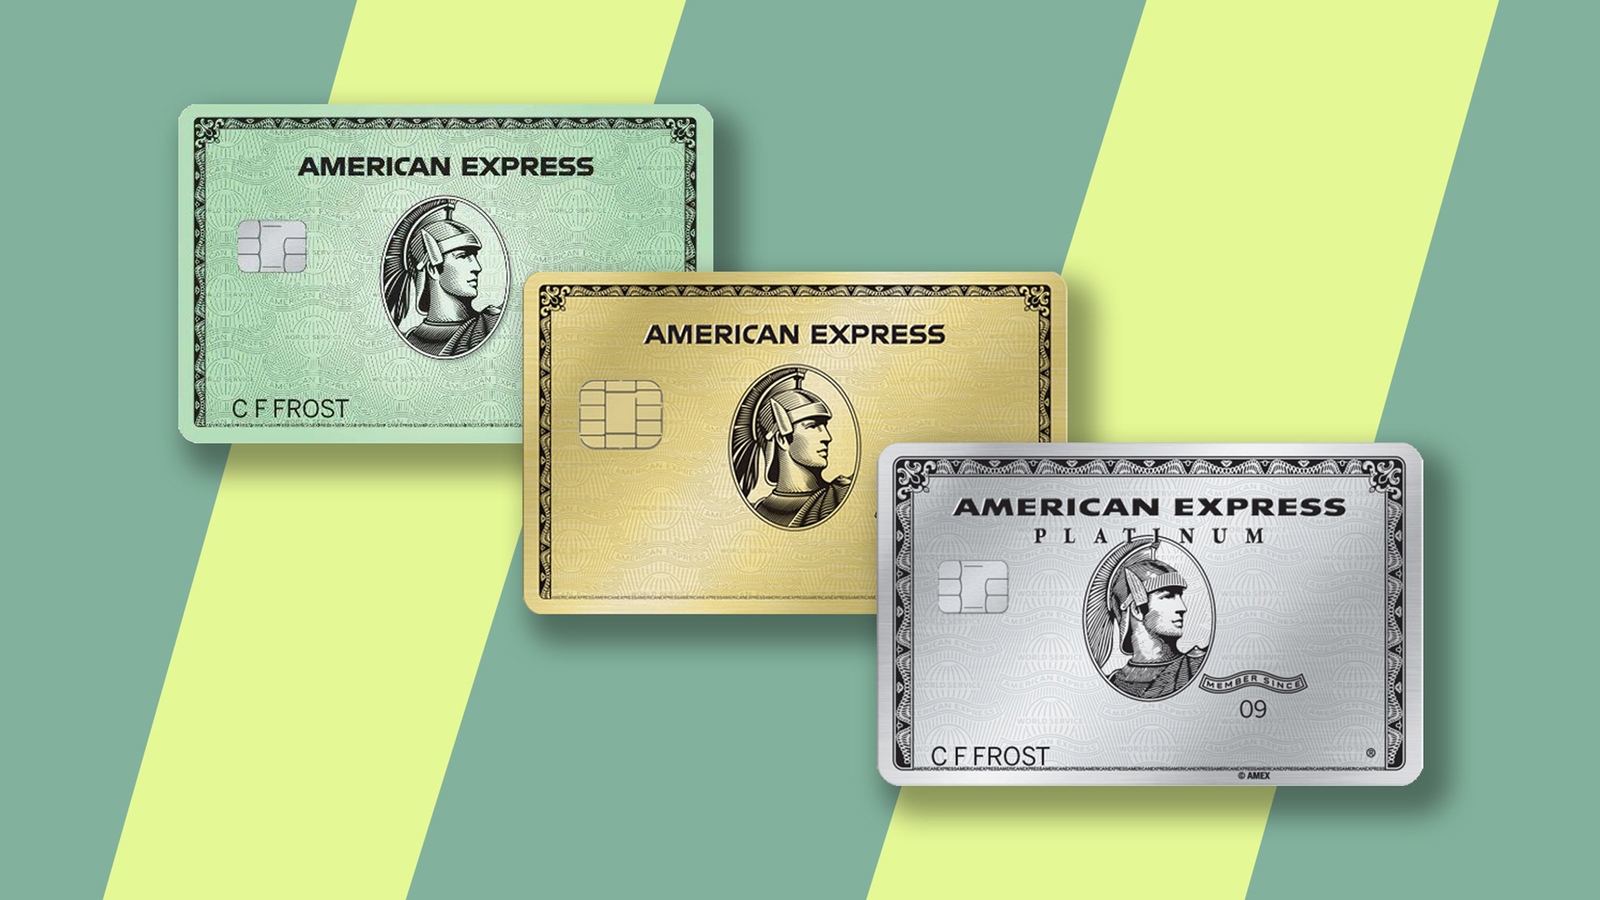 Amex (American Express) Kart nedir?